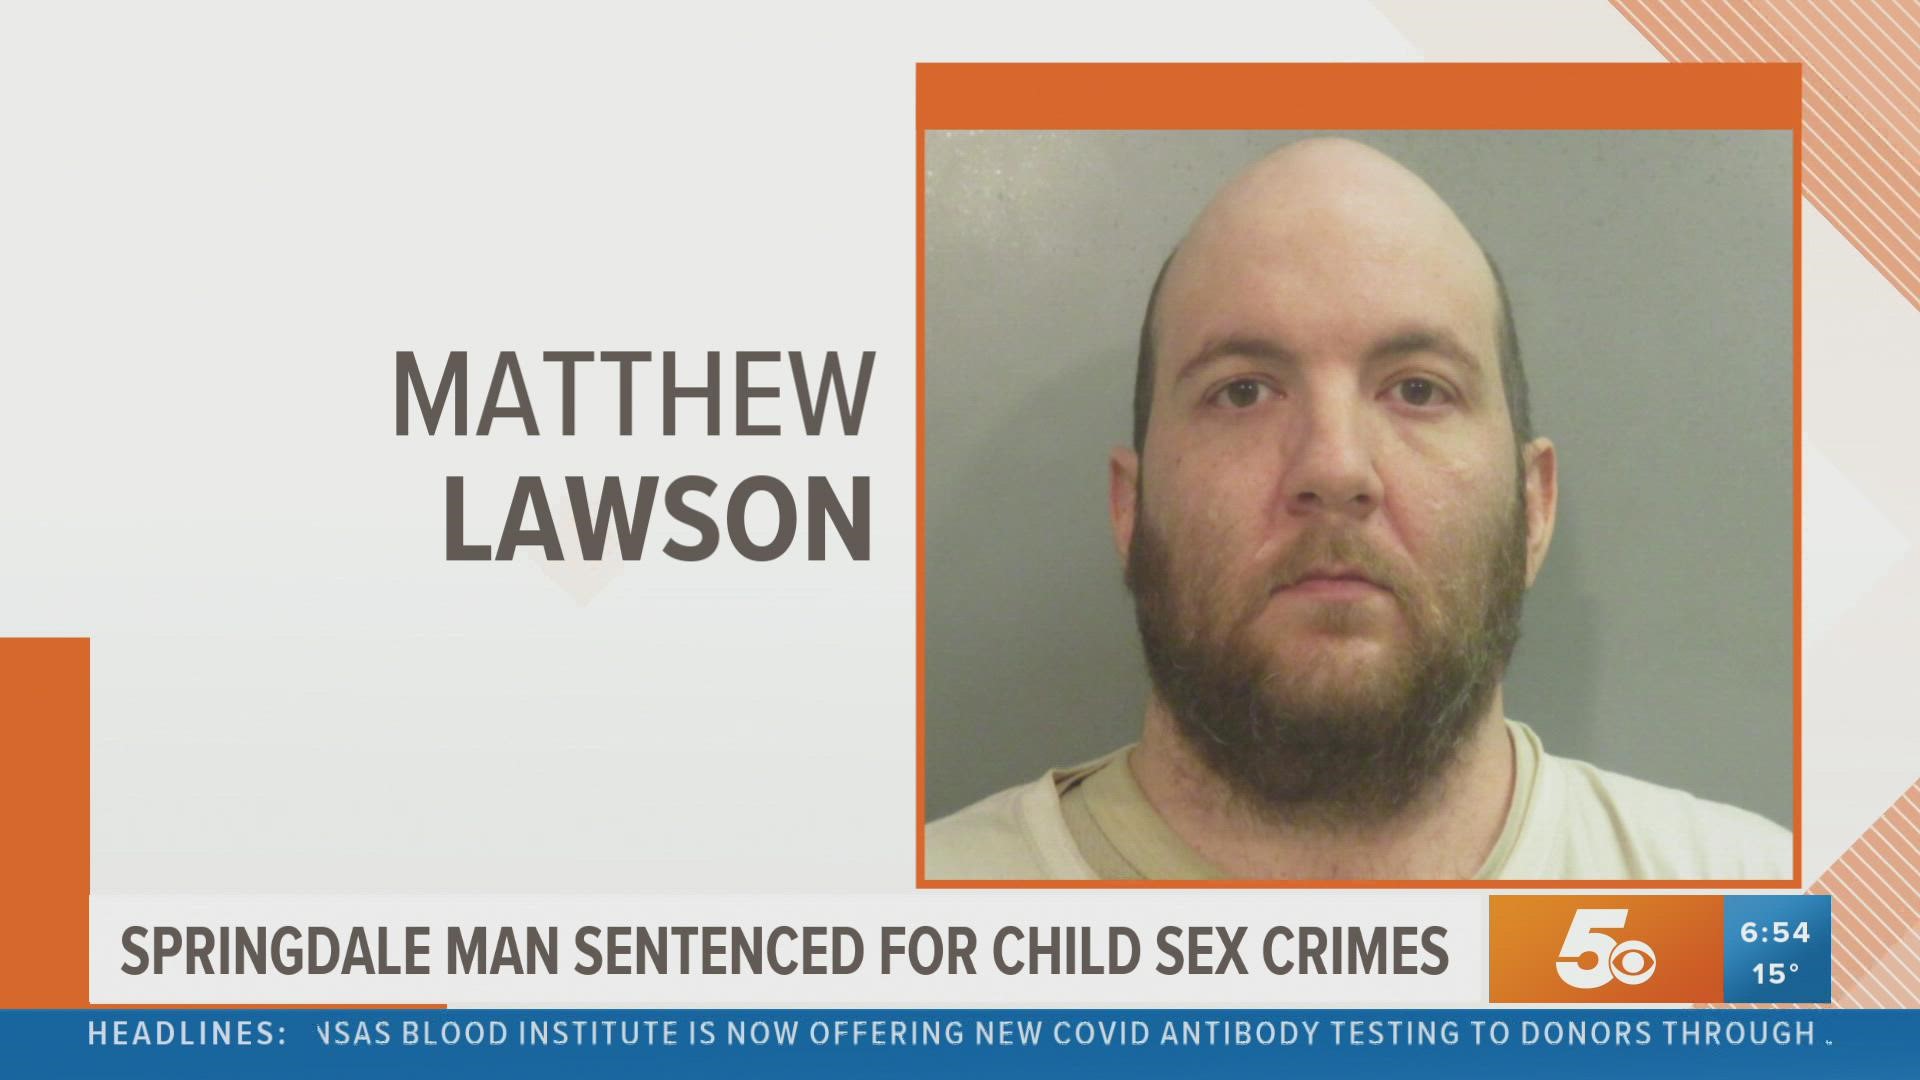 Matthew Lawson of Springdale was sentenced for child sex crimes.